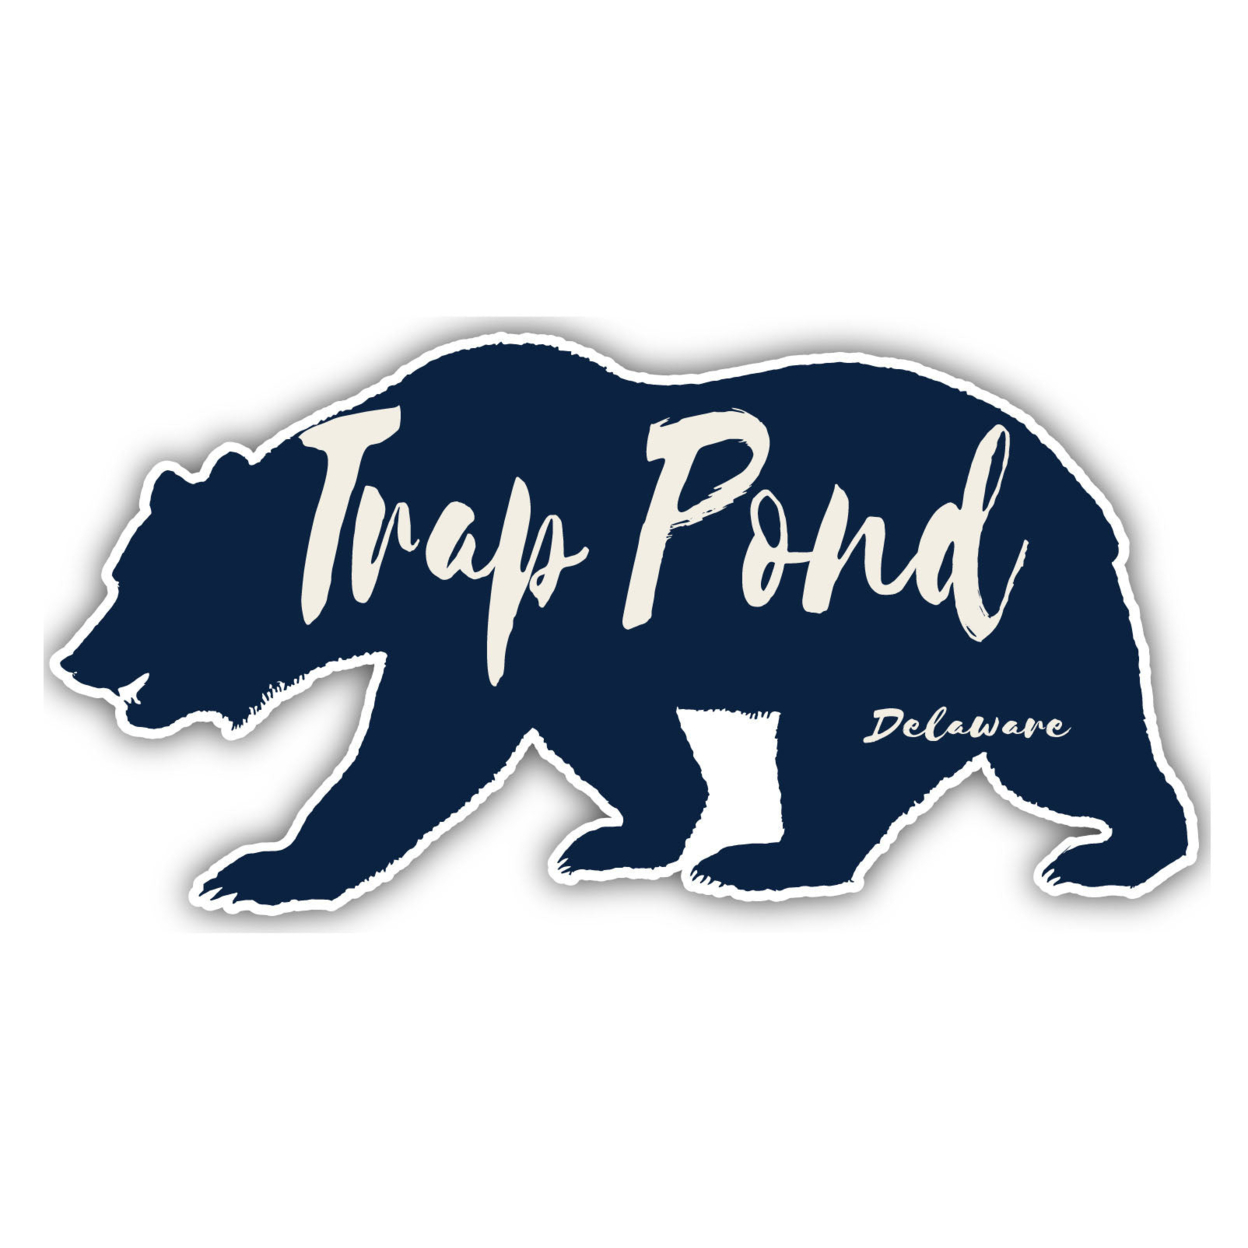 Trap Pond Delaware Souvenir Decorative Stickers (Choose Theme And Size) - Single Unit, 2-Inch, Bear